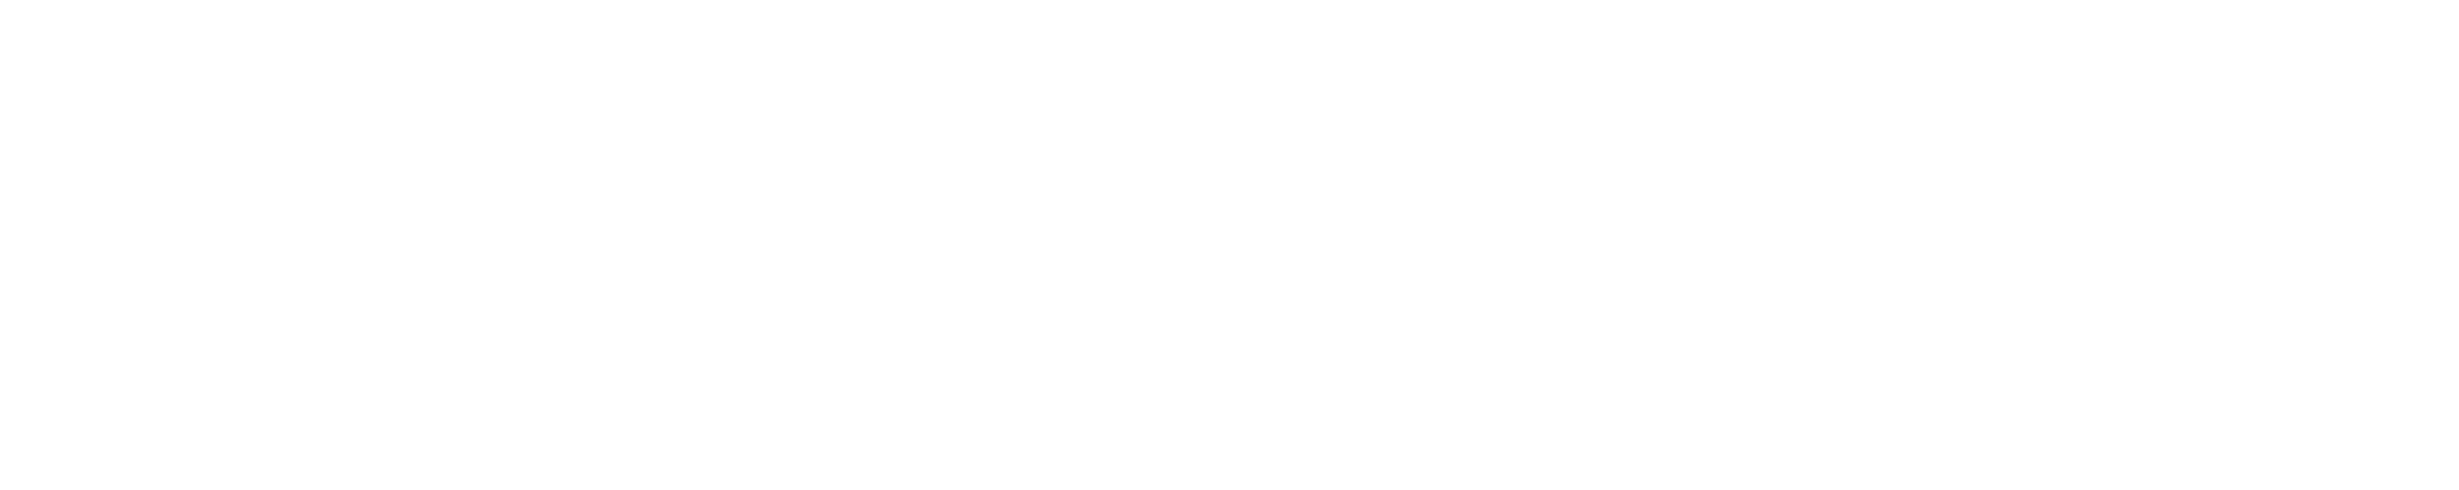 W Abrasivres logo